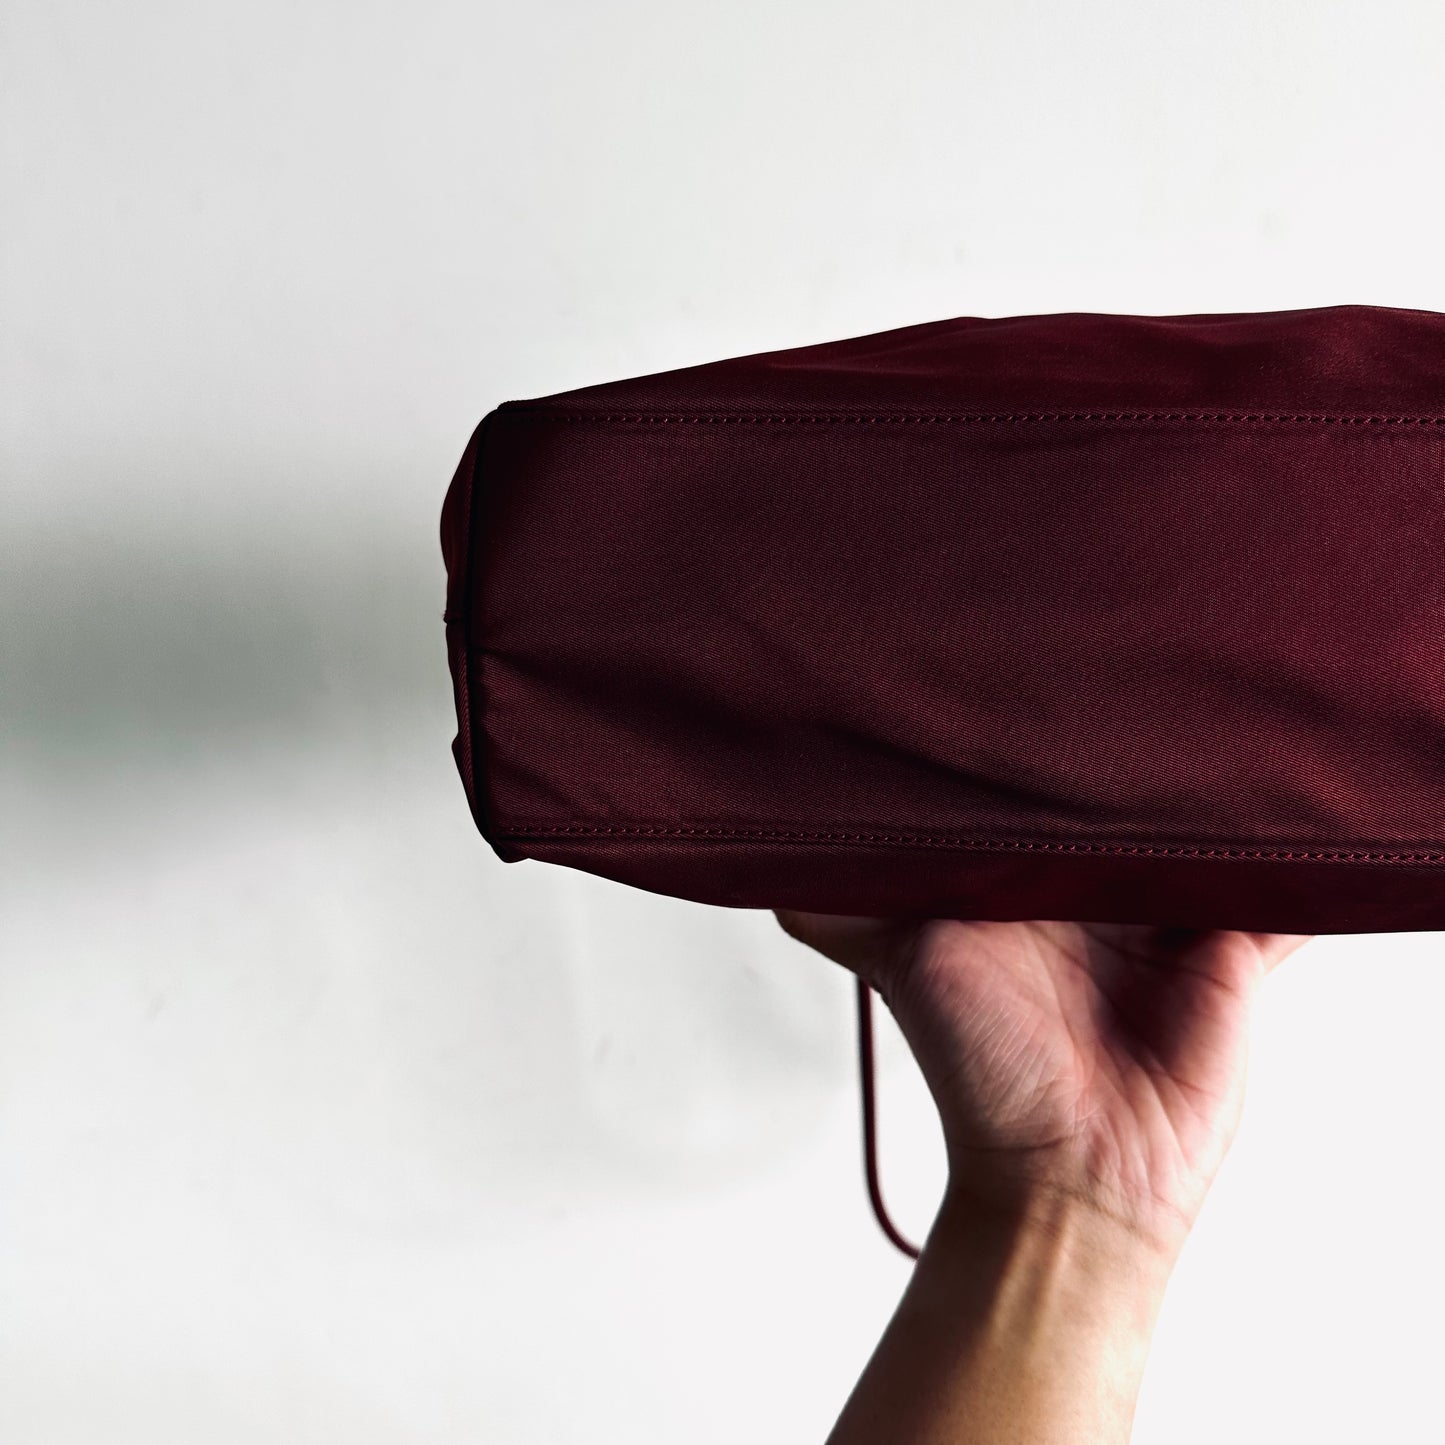 Prada Maroon Burgundy Red Classic Logo Nylon Shopper Zip Shoulder Tote Bag